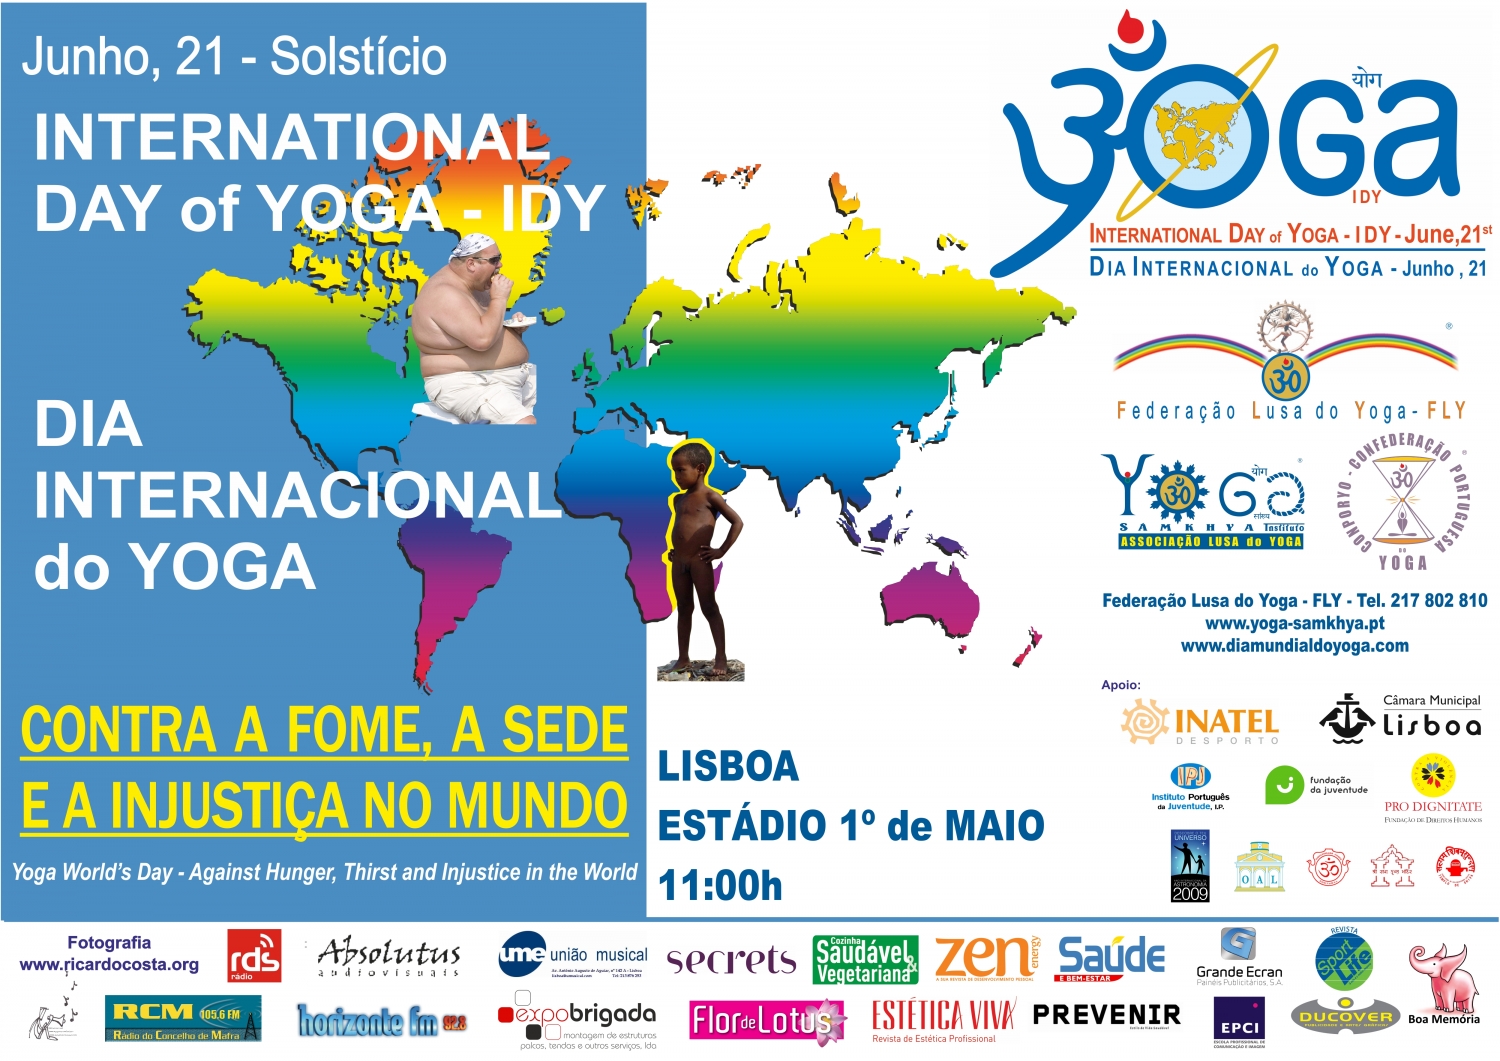 International Day of Yoga - IDY - 2009, Lisboa